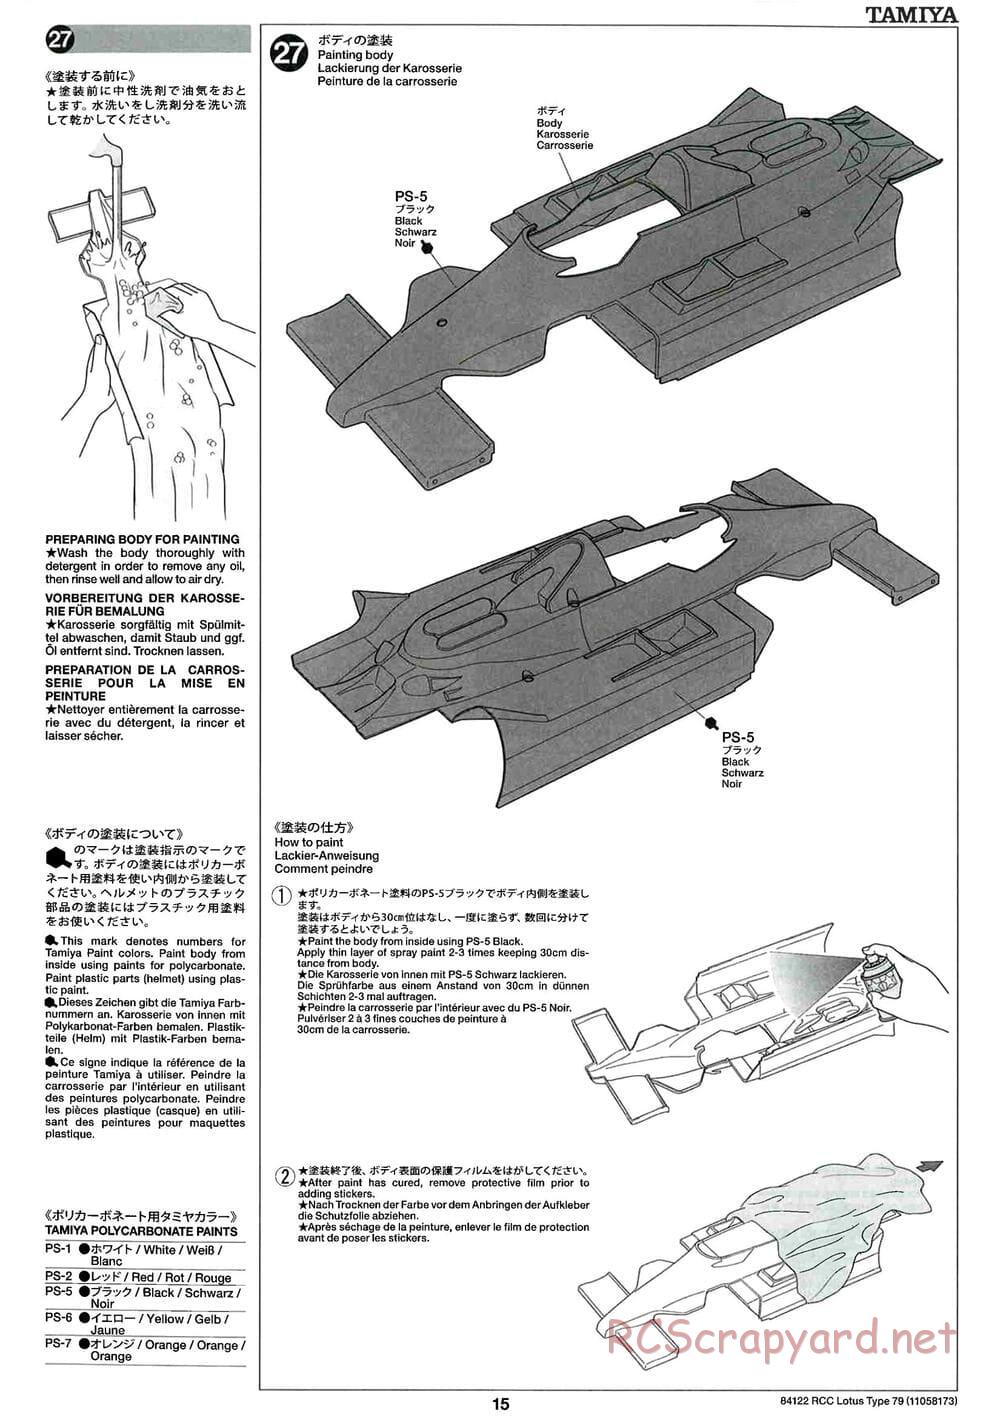 Tamiya - Lotus Type 79 - F104W Chassis - Manual - Page 15